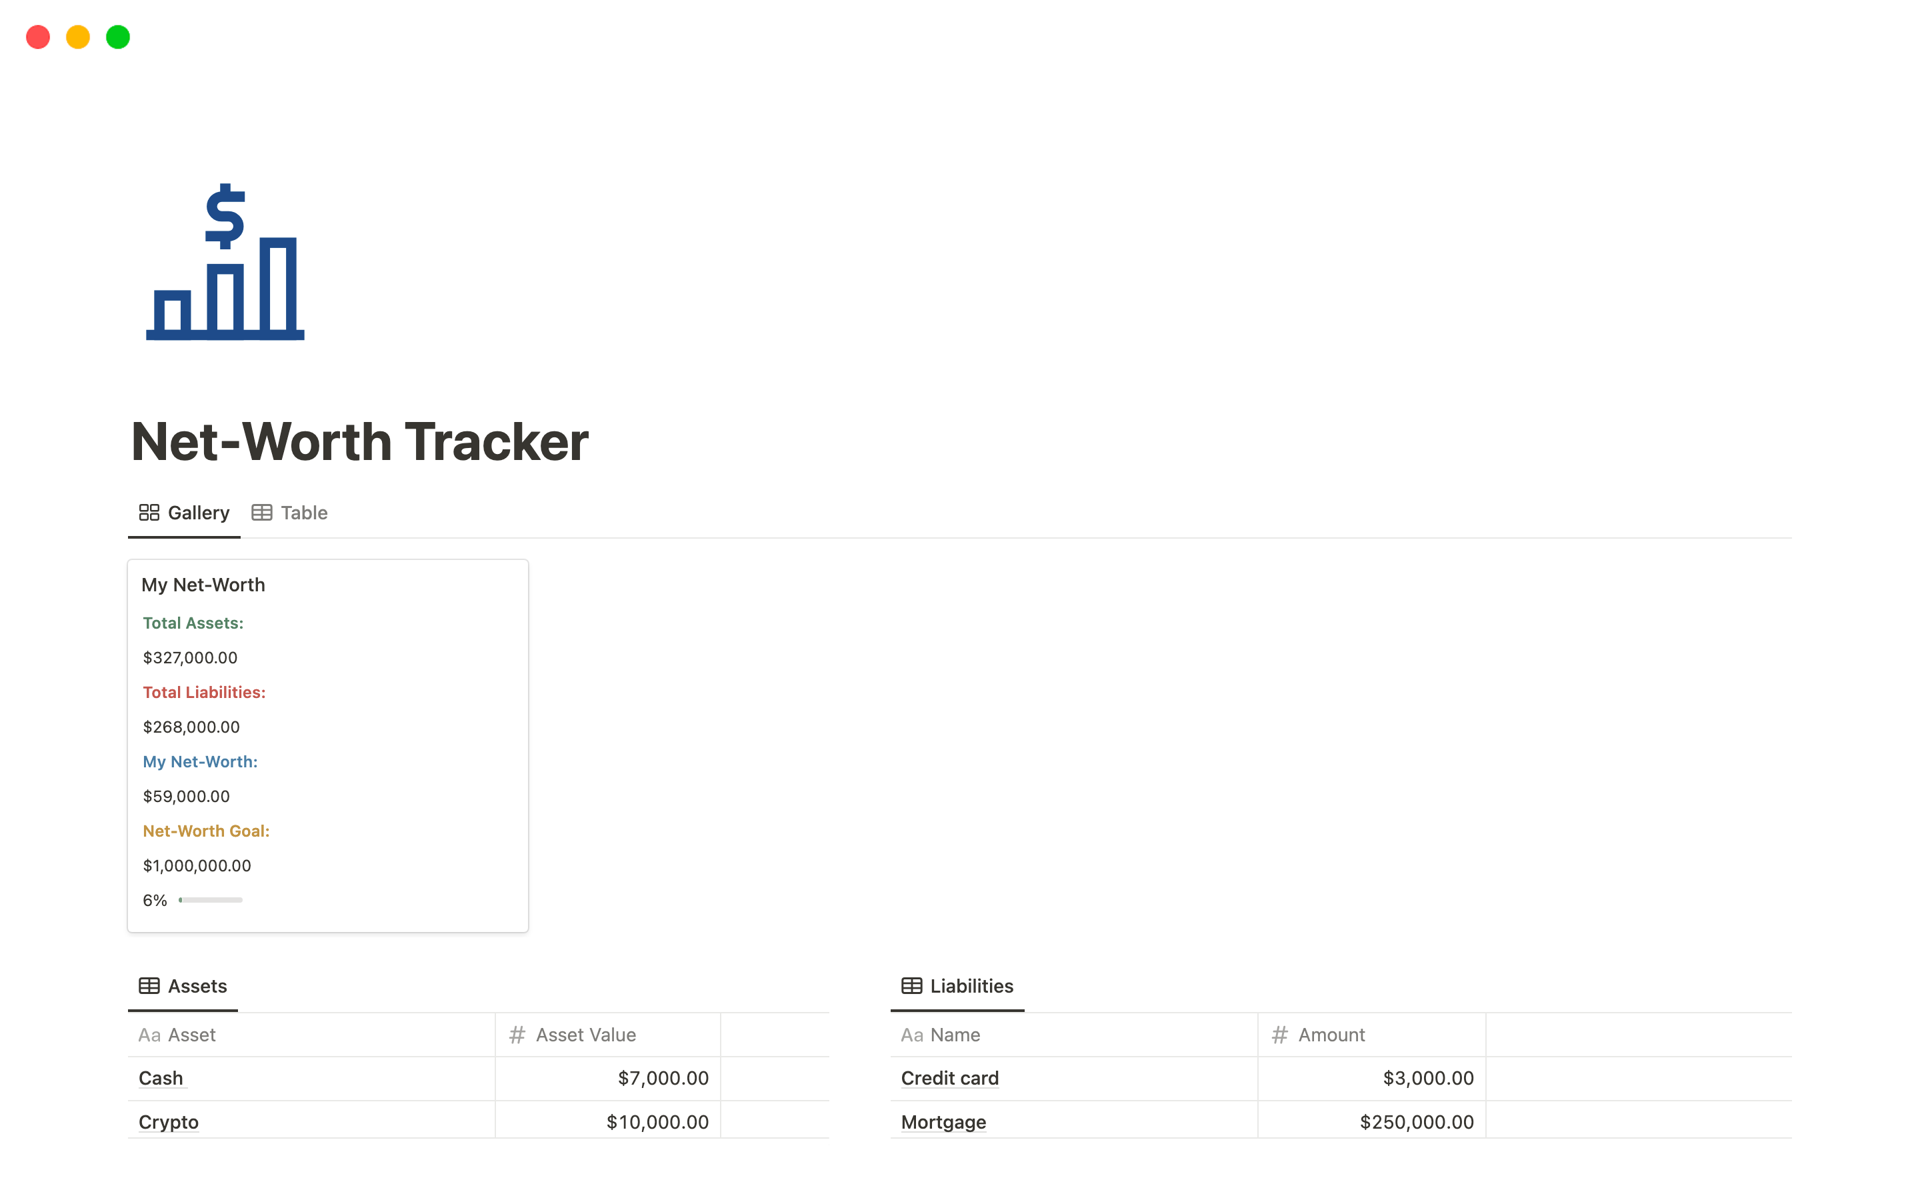 Vista previa de una plantilla para Net-Worth Tracker